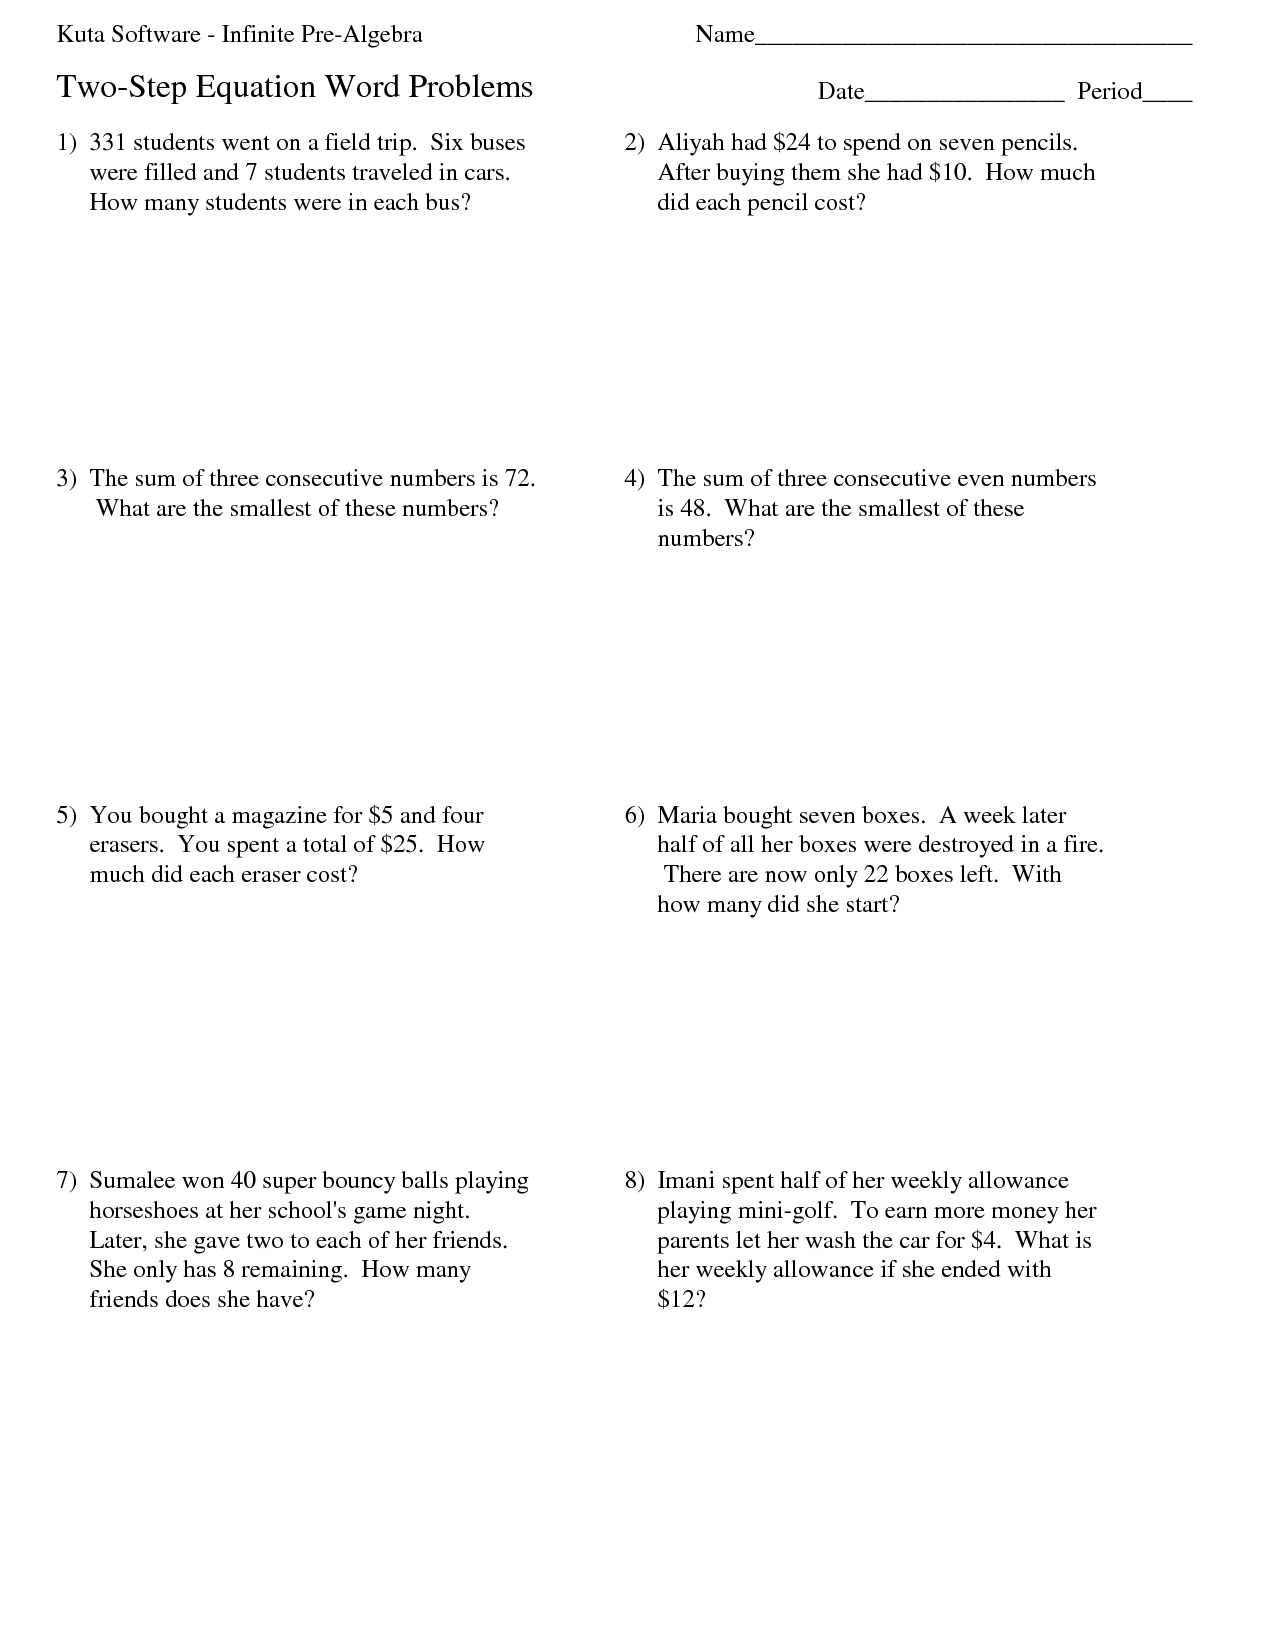 13 Best Images of 2 Step Word Problems Worksheet  TwoStep Word Problem Worksheets, 3rd Grade 